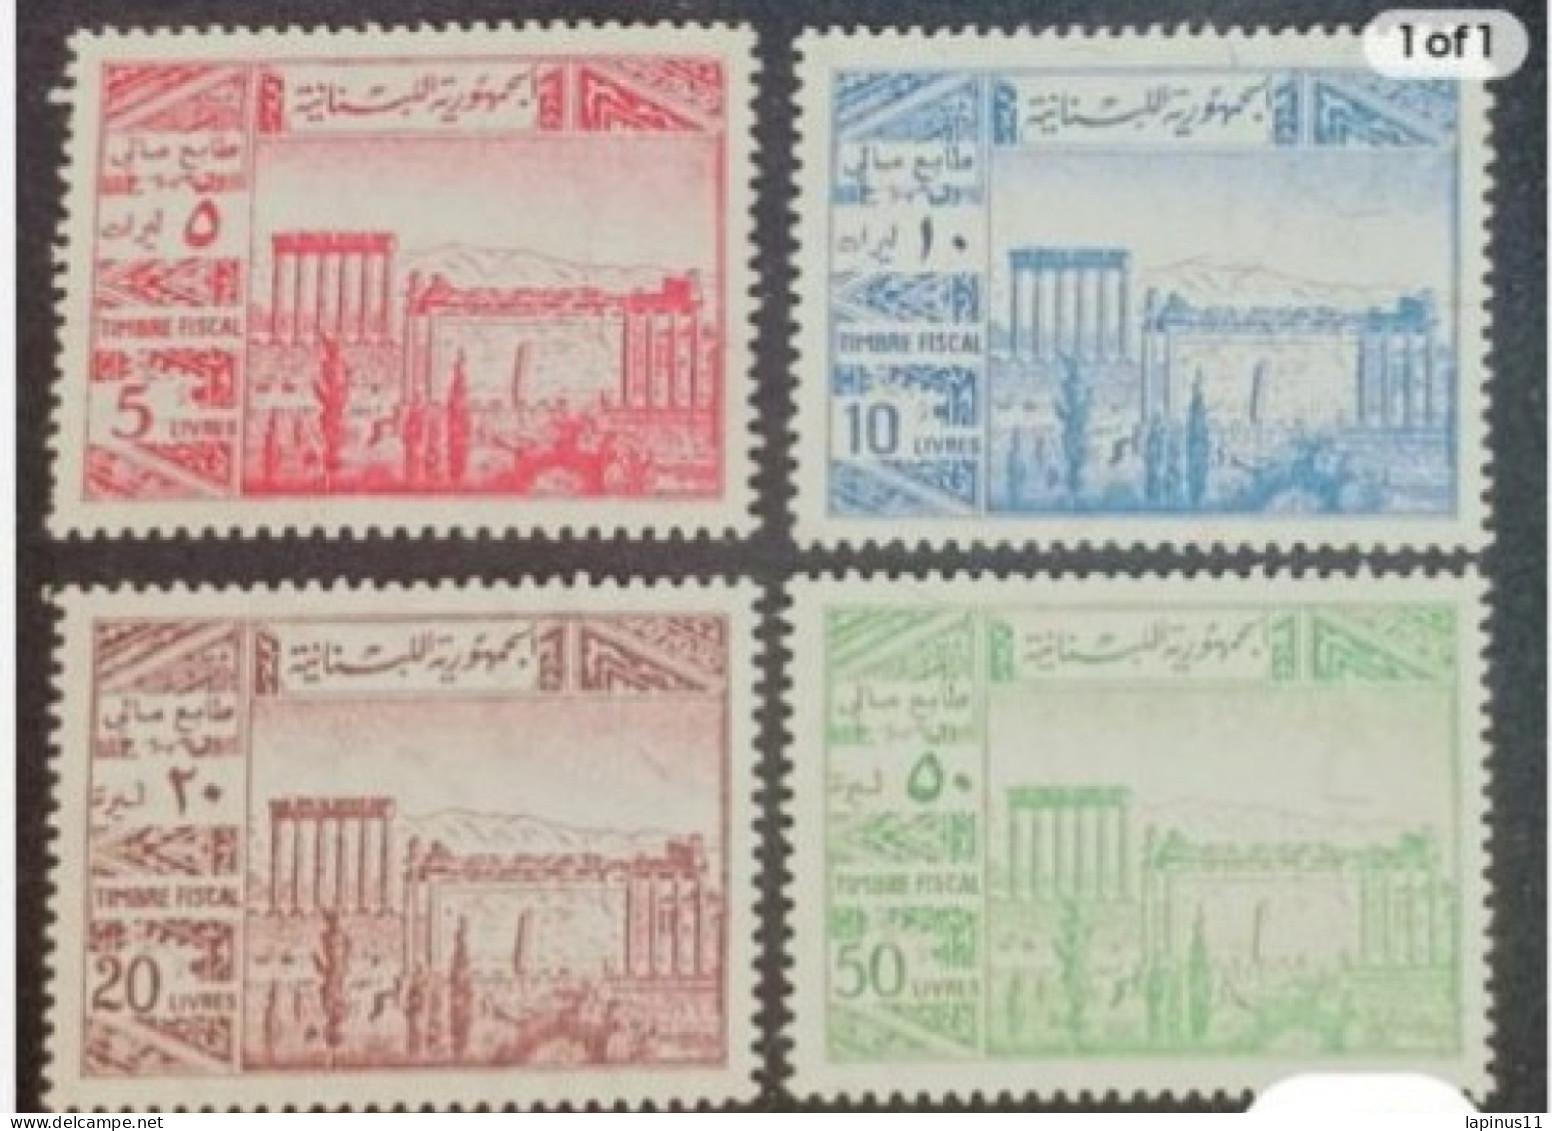 LIBAN LEBANON FISCAL REVENUE STAMPS 1974 RARE  ANJAR ISSUE FULL SHEET MNH 5102050 LIVRES - Libanon